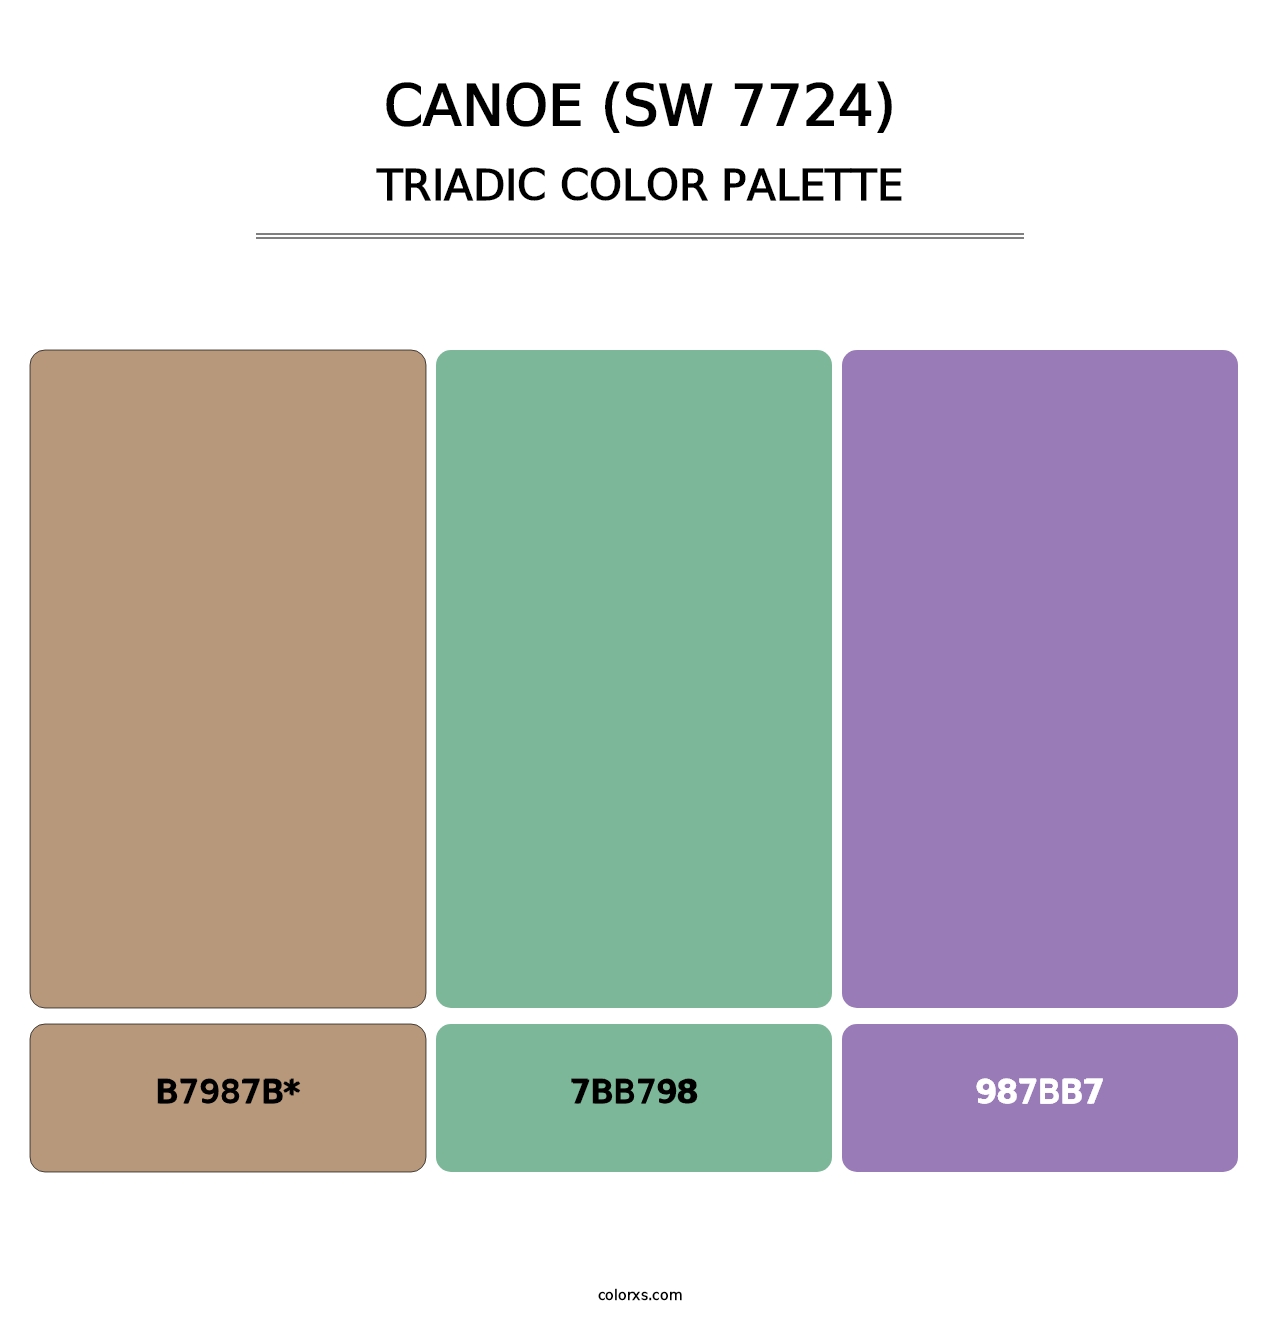 Canoe (SW 7724) - Triadic Color Palette